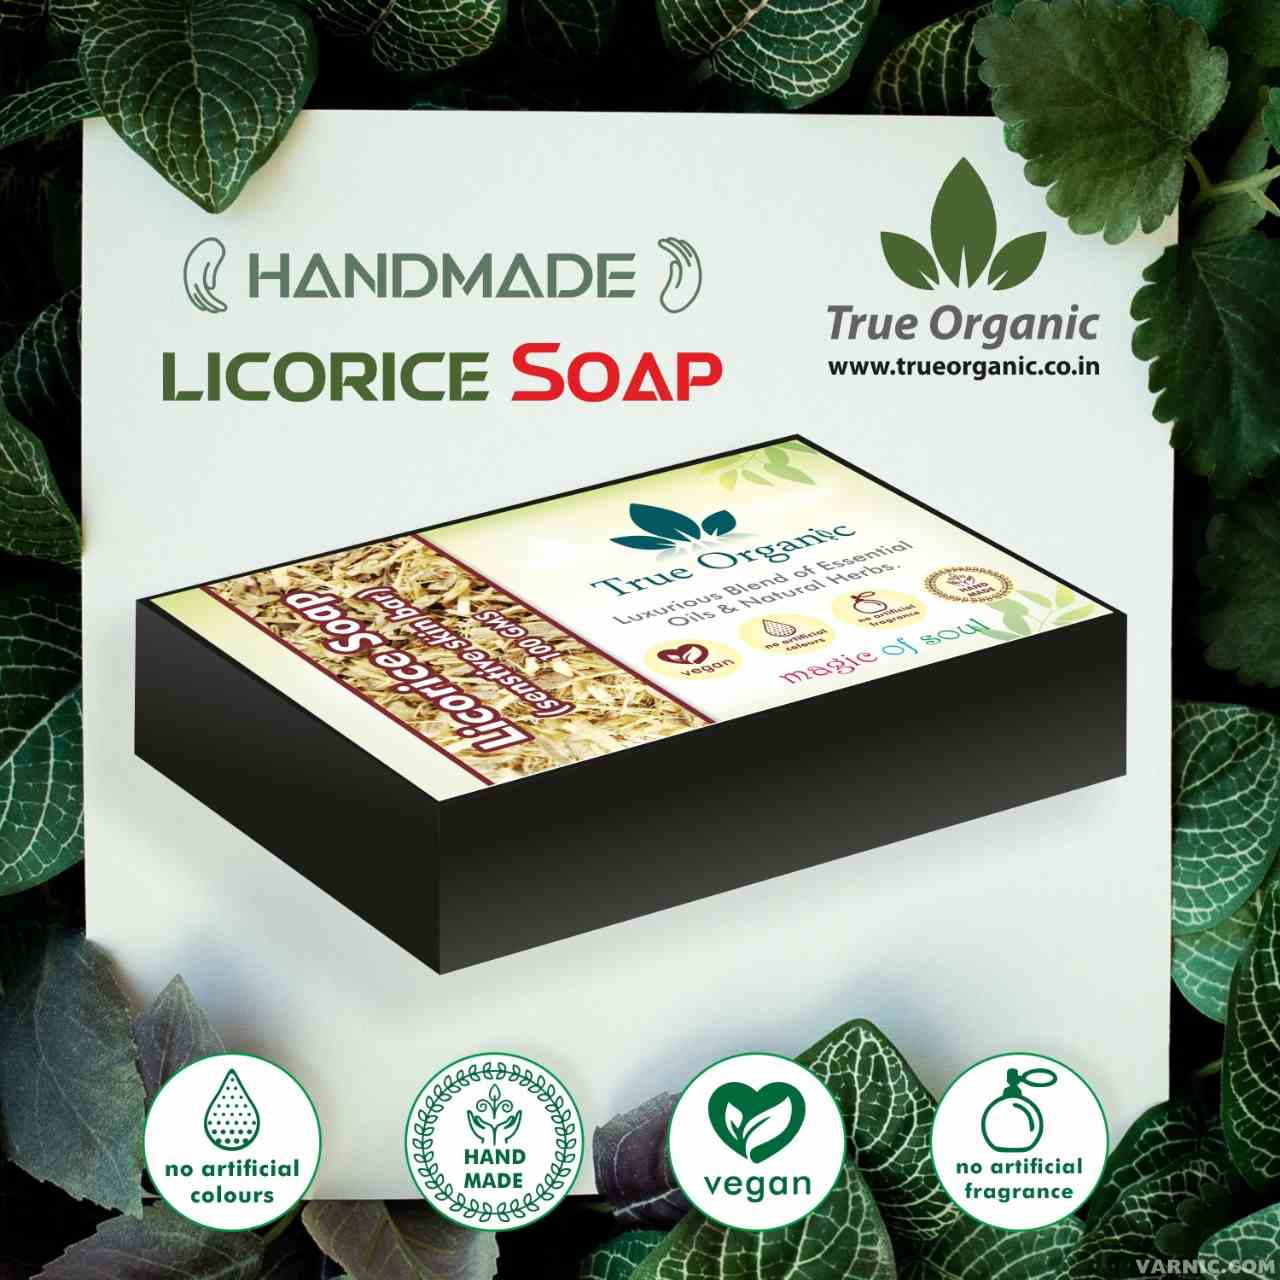 True Organic Licorice Soap